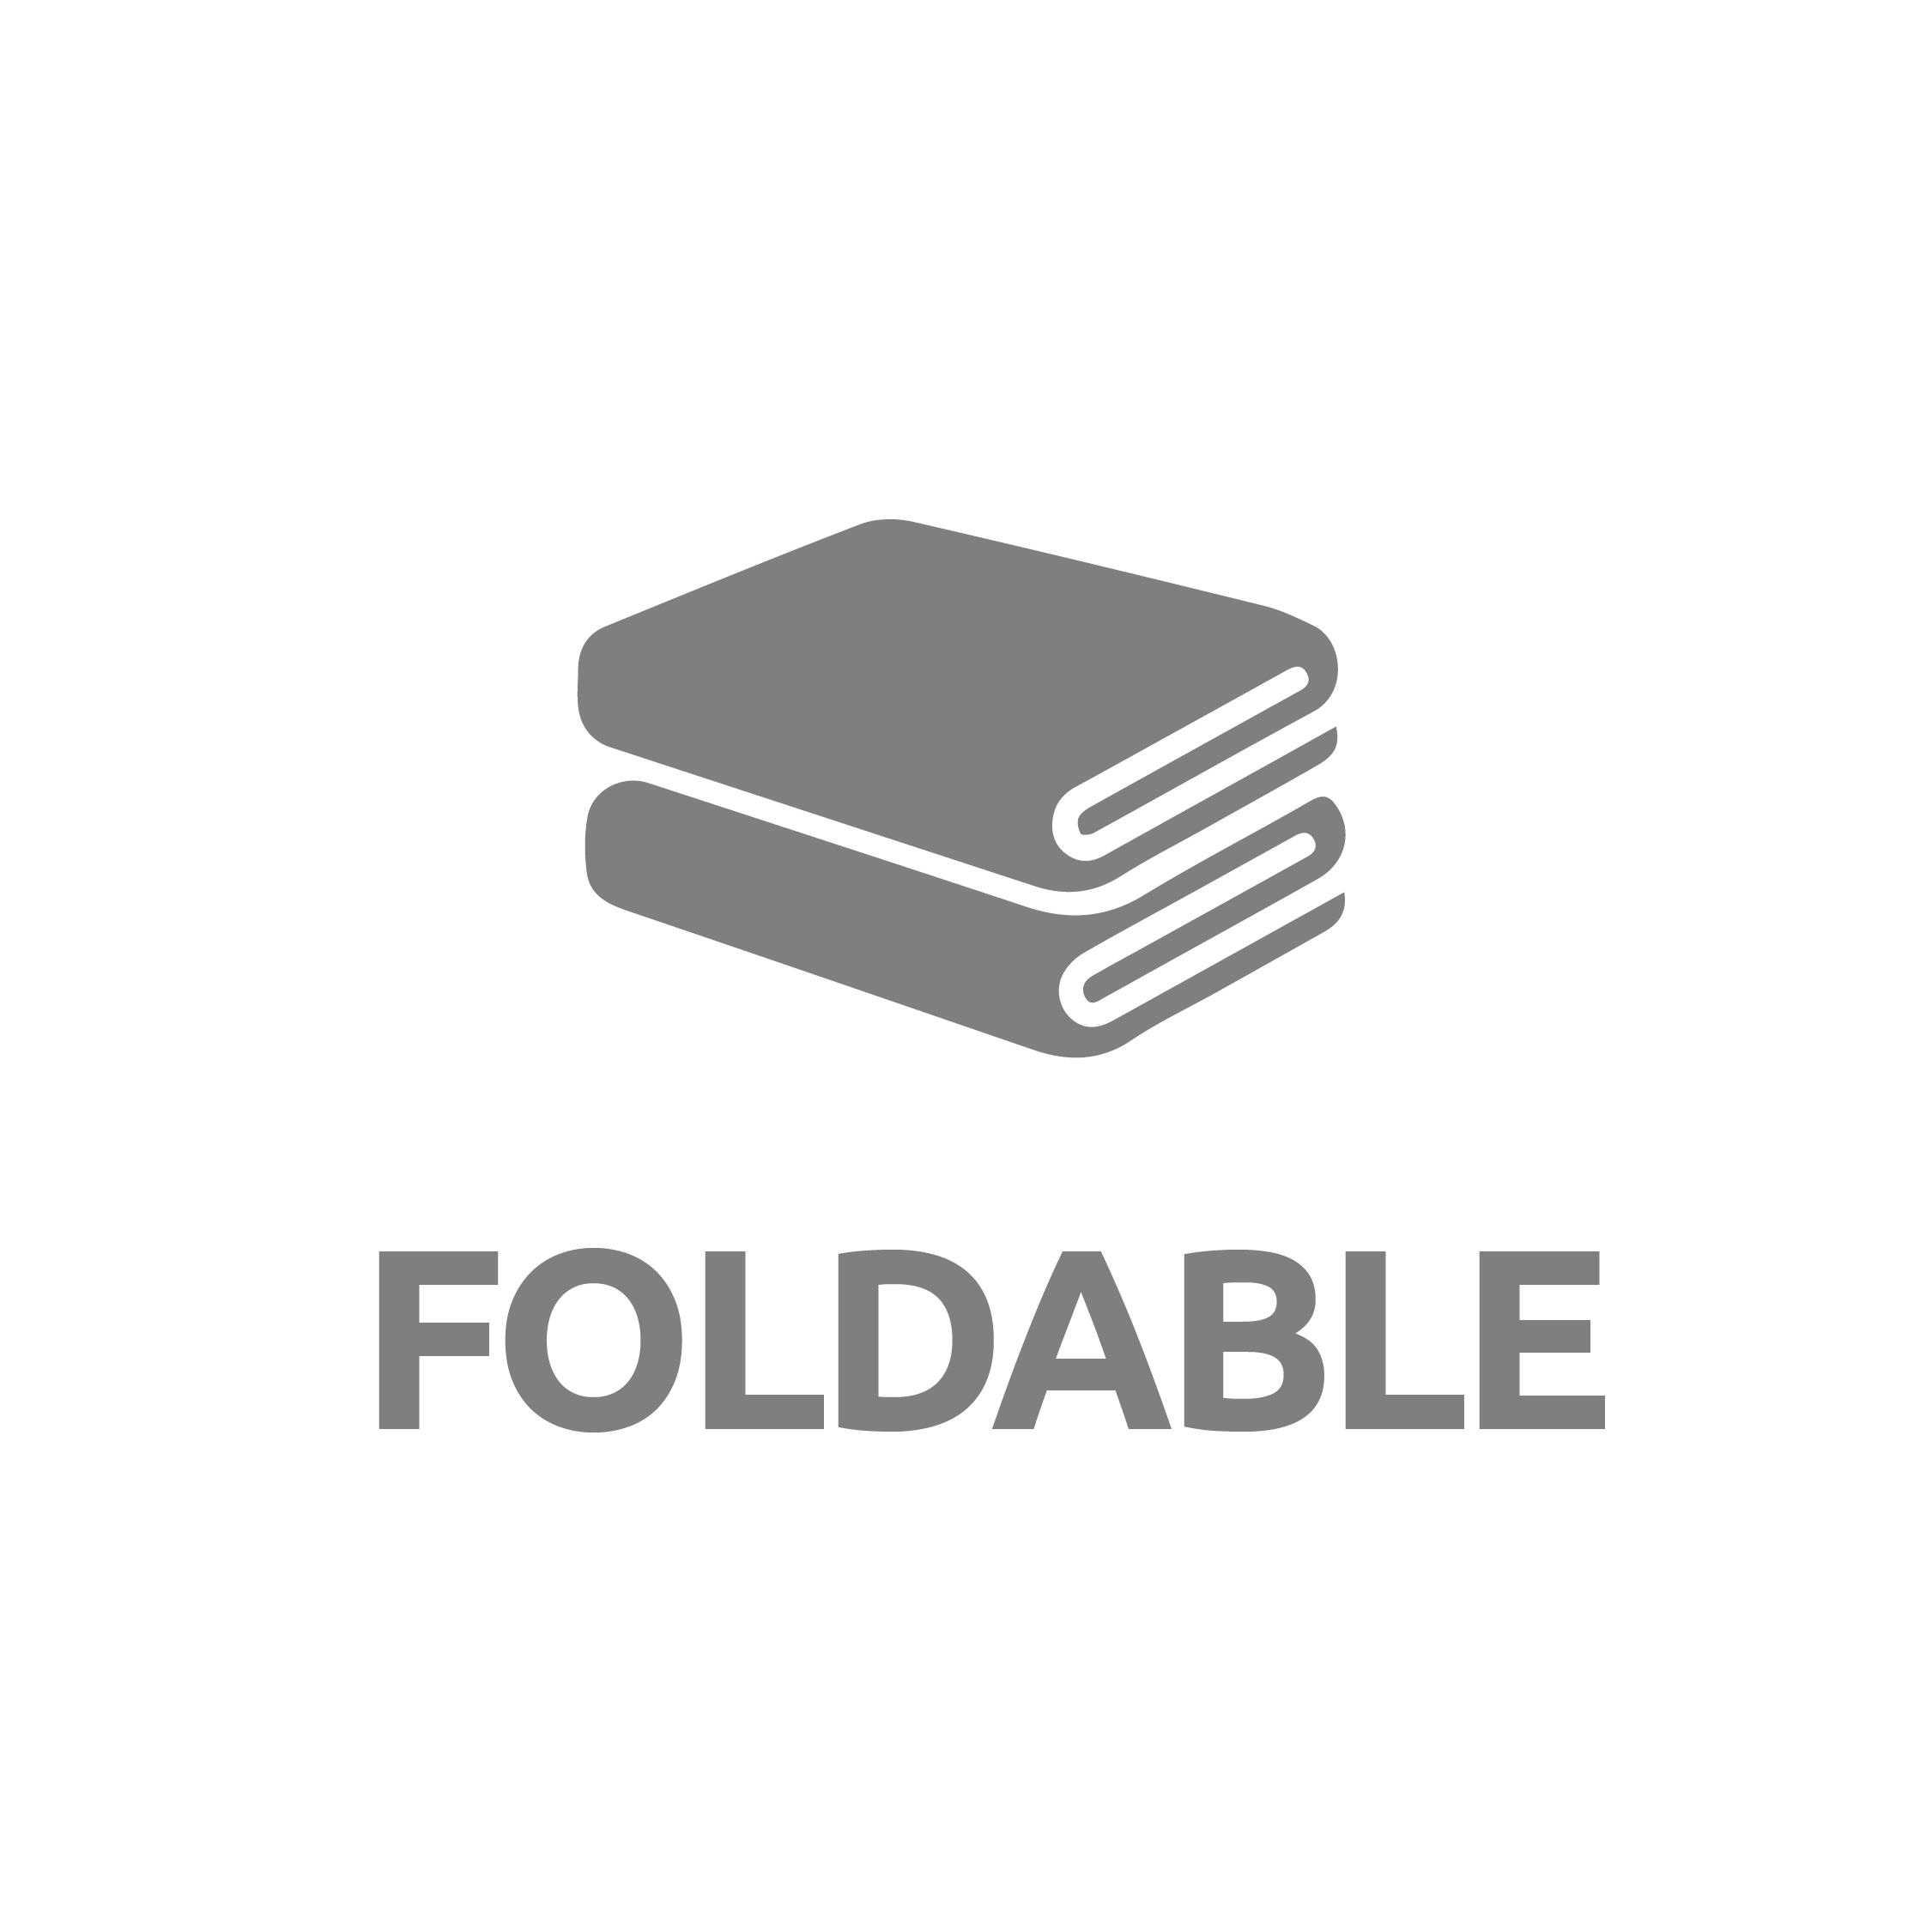 Signs znak_Foldable